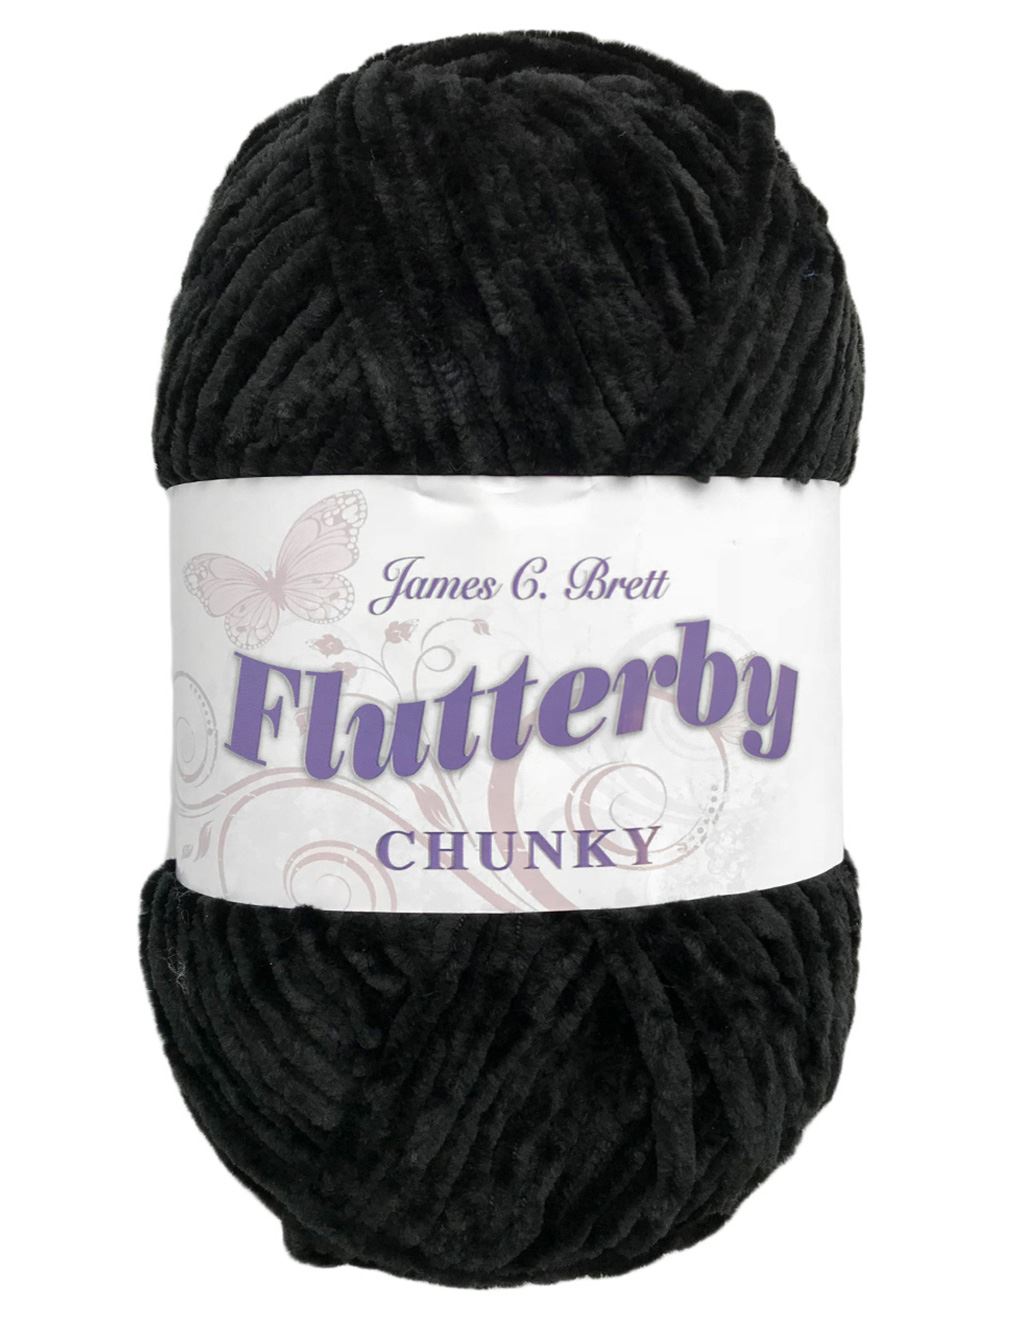 James C Brett Flutterby Chunky (B30) chenille yarn - 100g